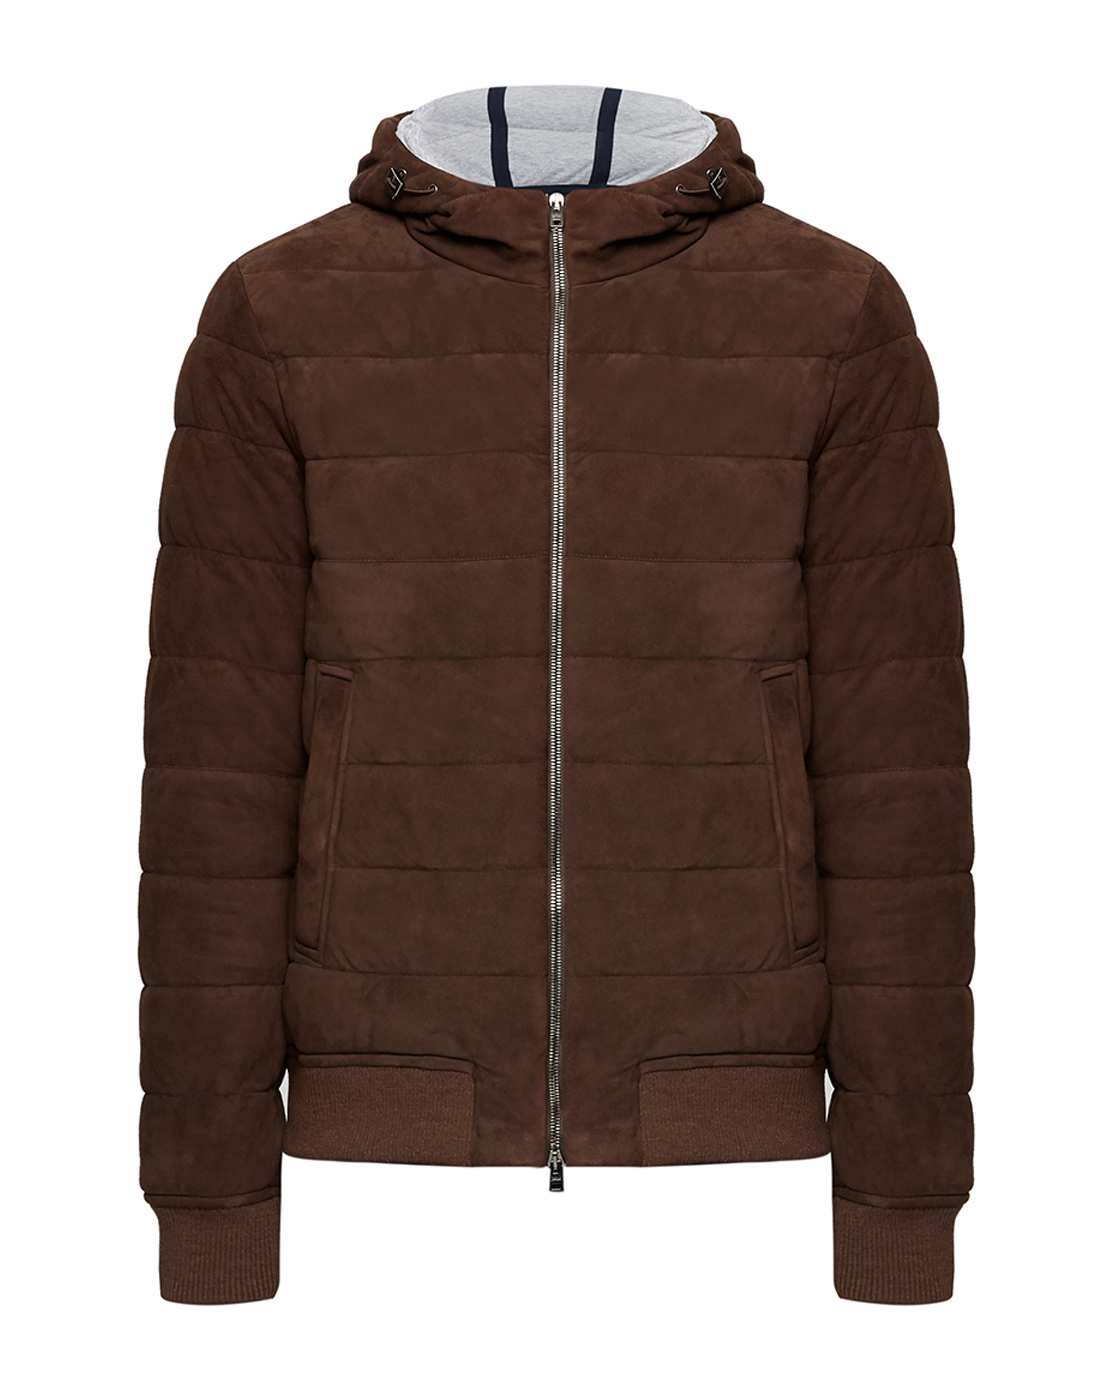 Мужская коричневая замшевая куртка Herno SPL002UR - 18058 - 8900-1